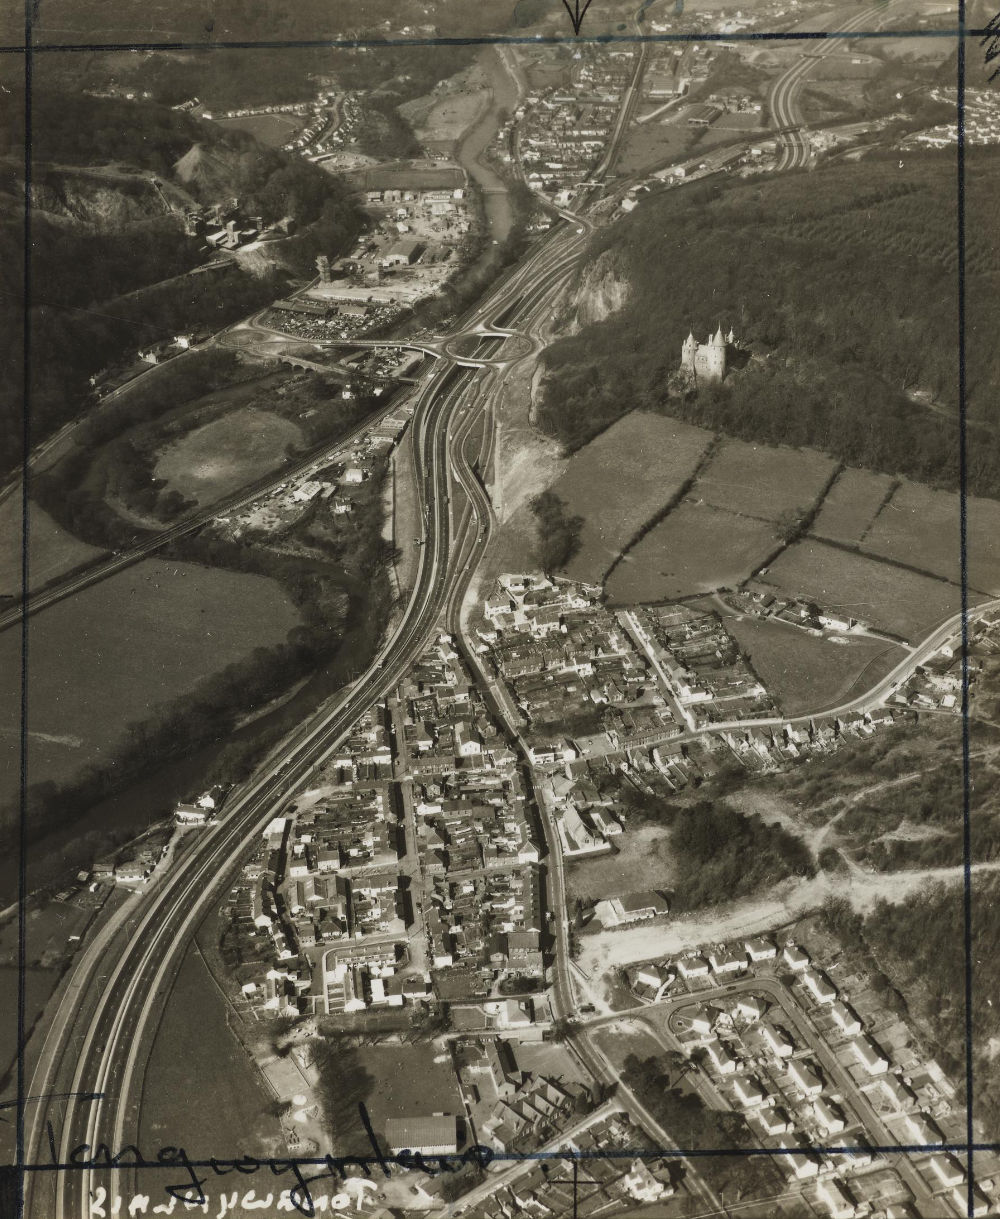 Aerial photo of Tongwynlais 1973